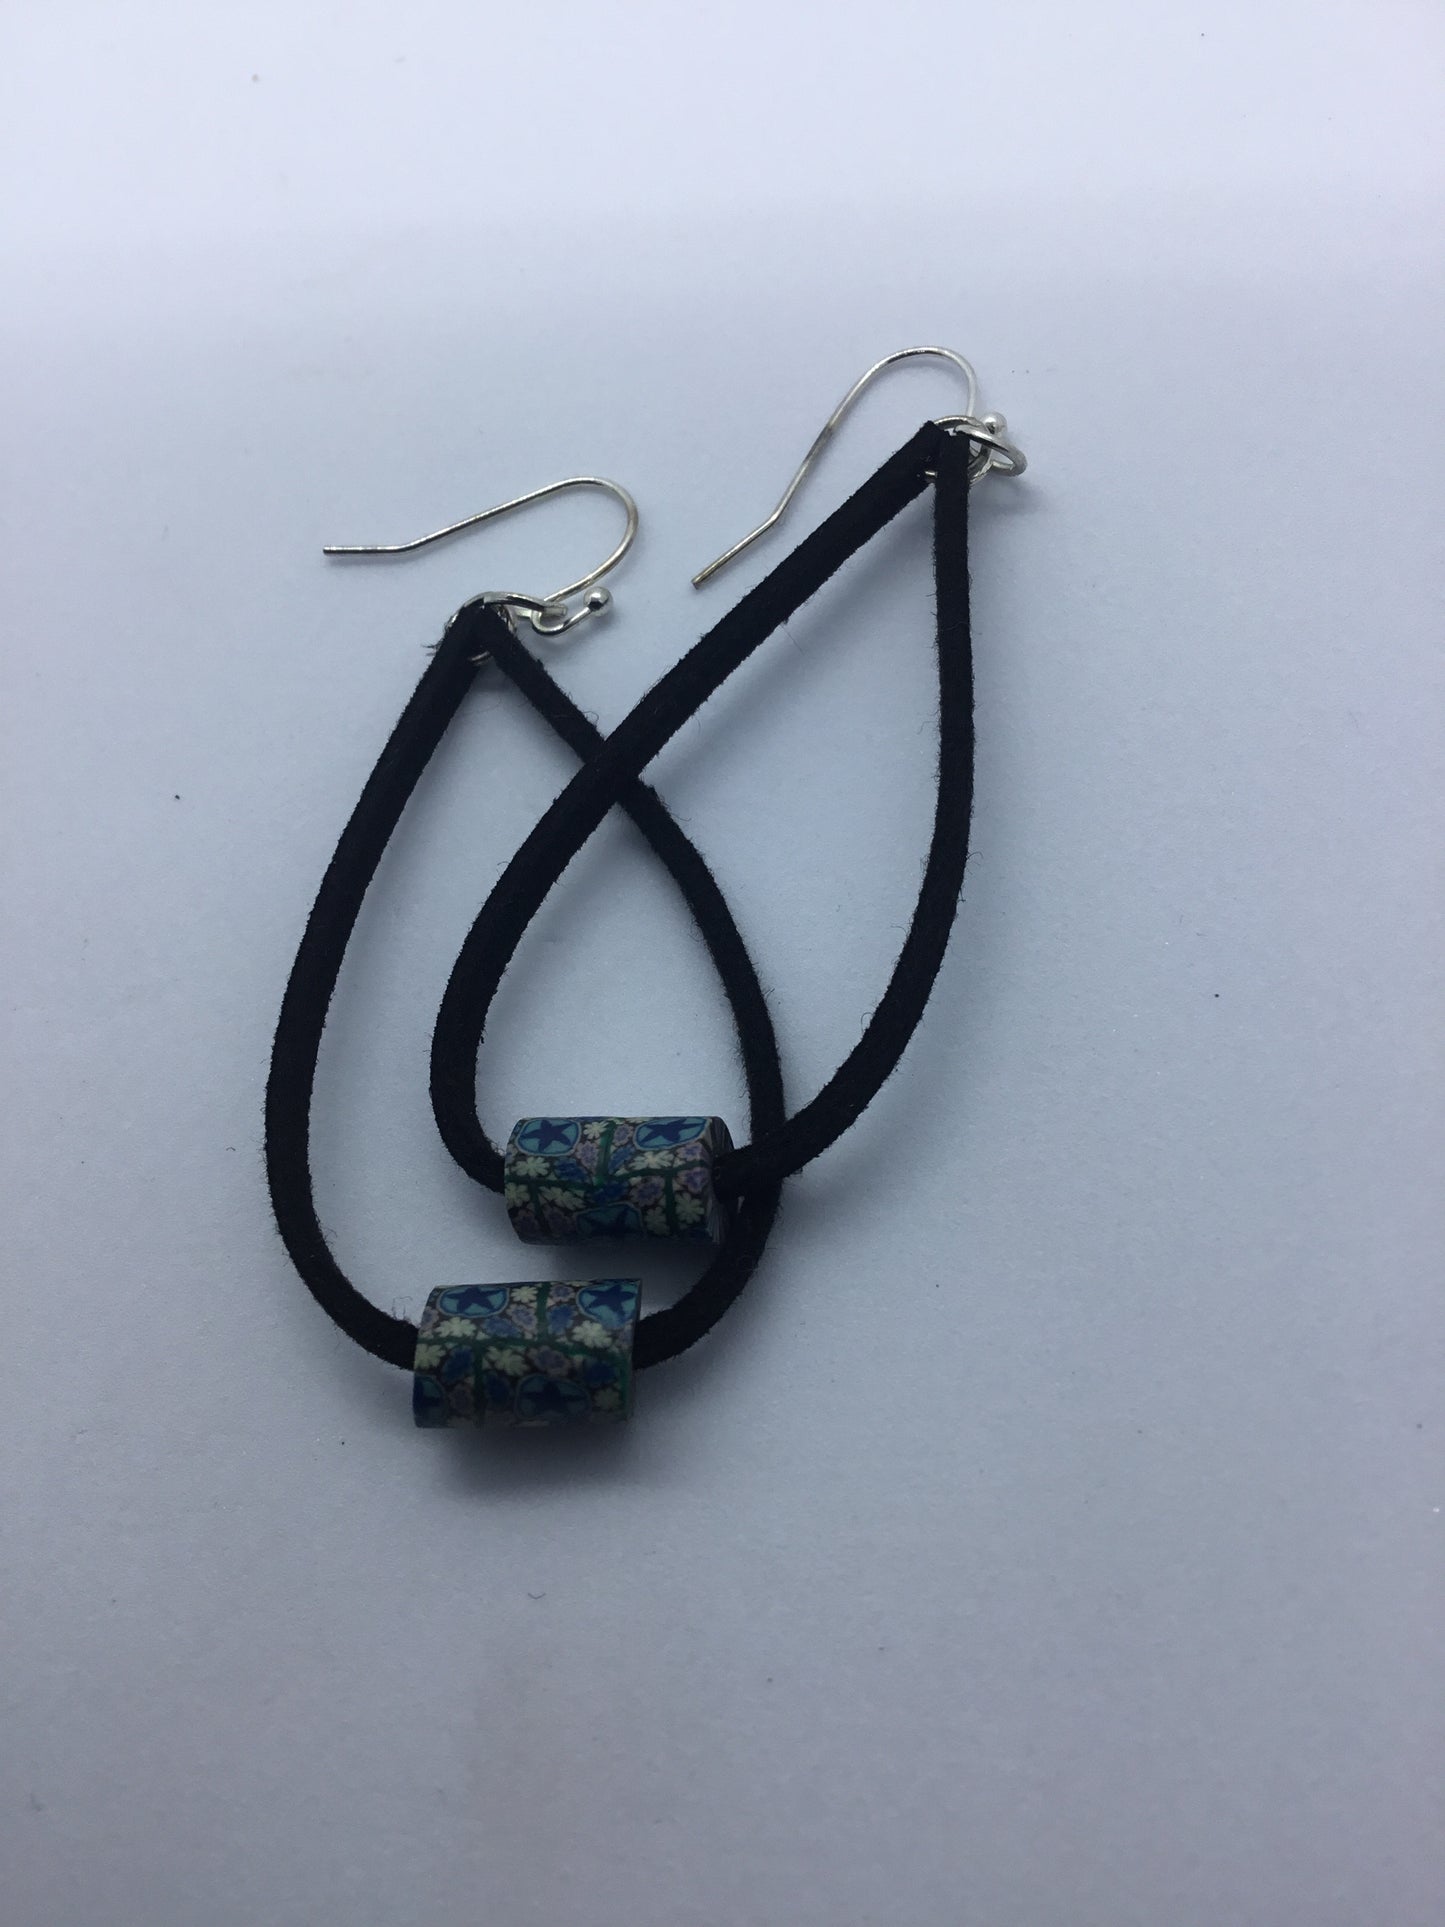 Blue bead on black leather cord earrings